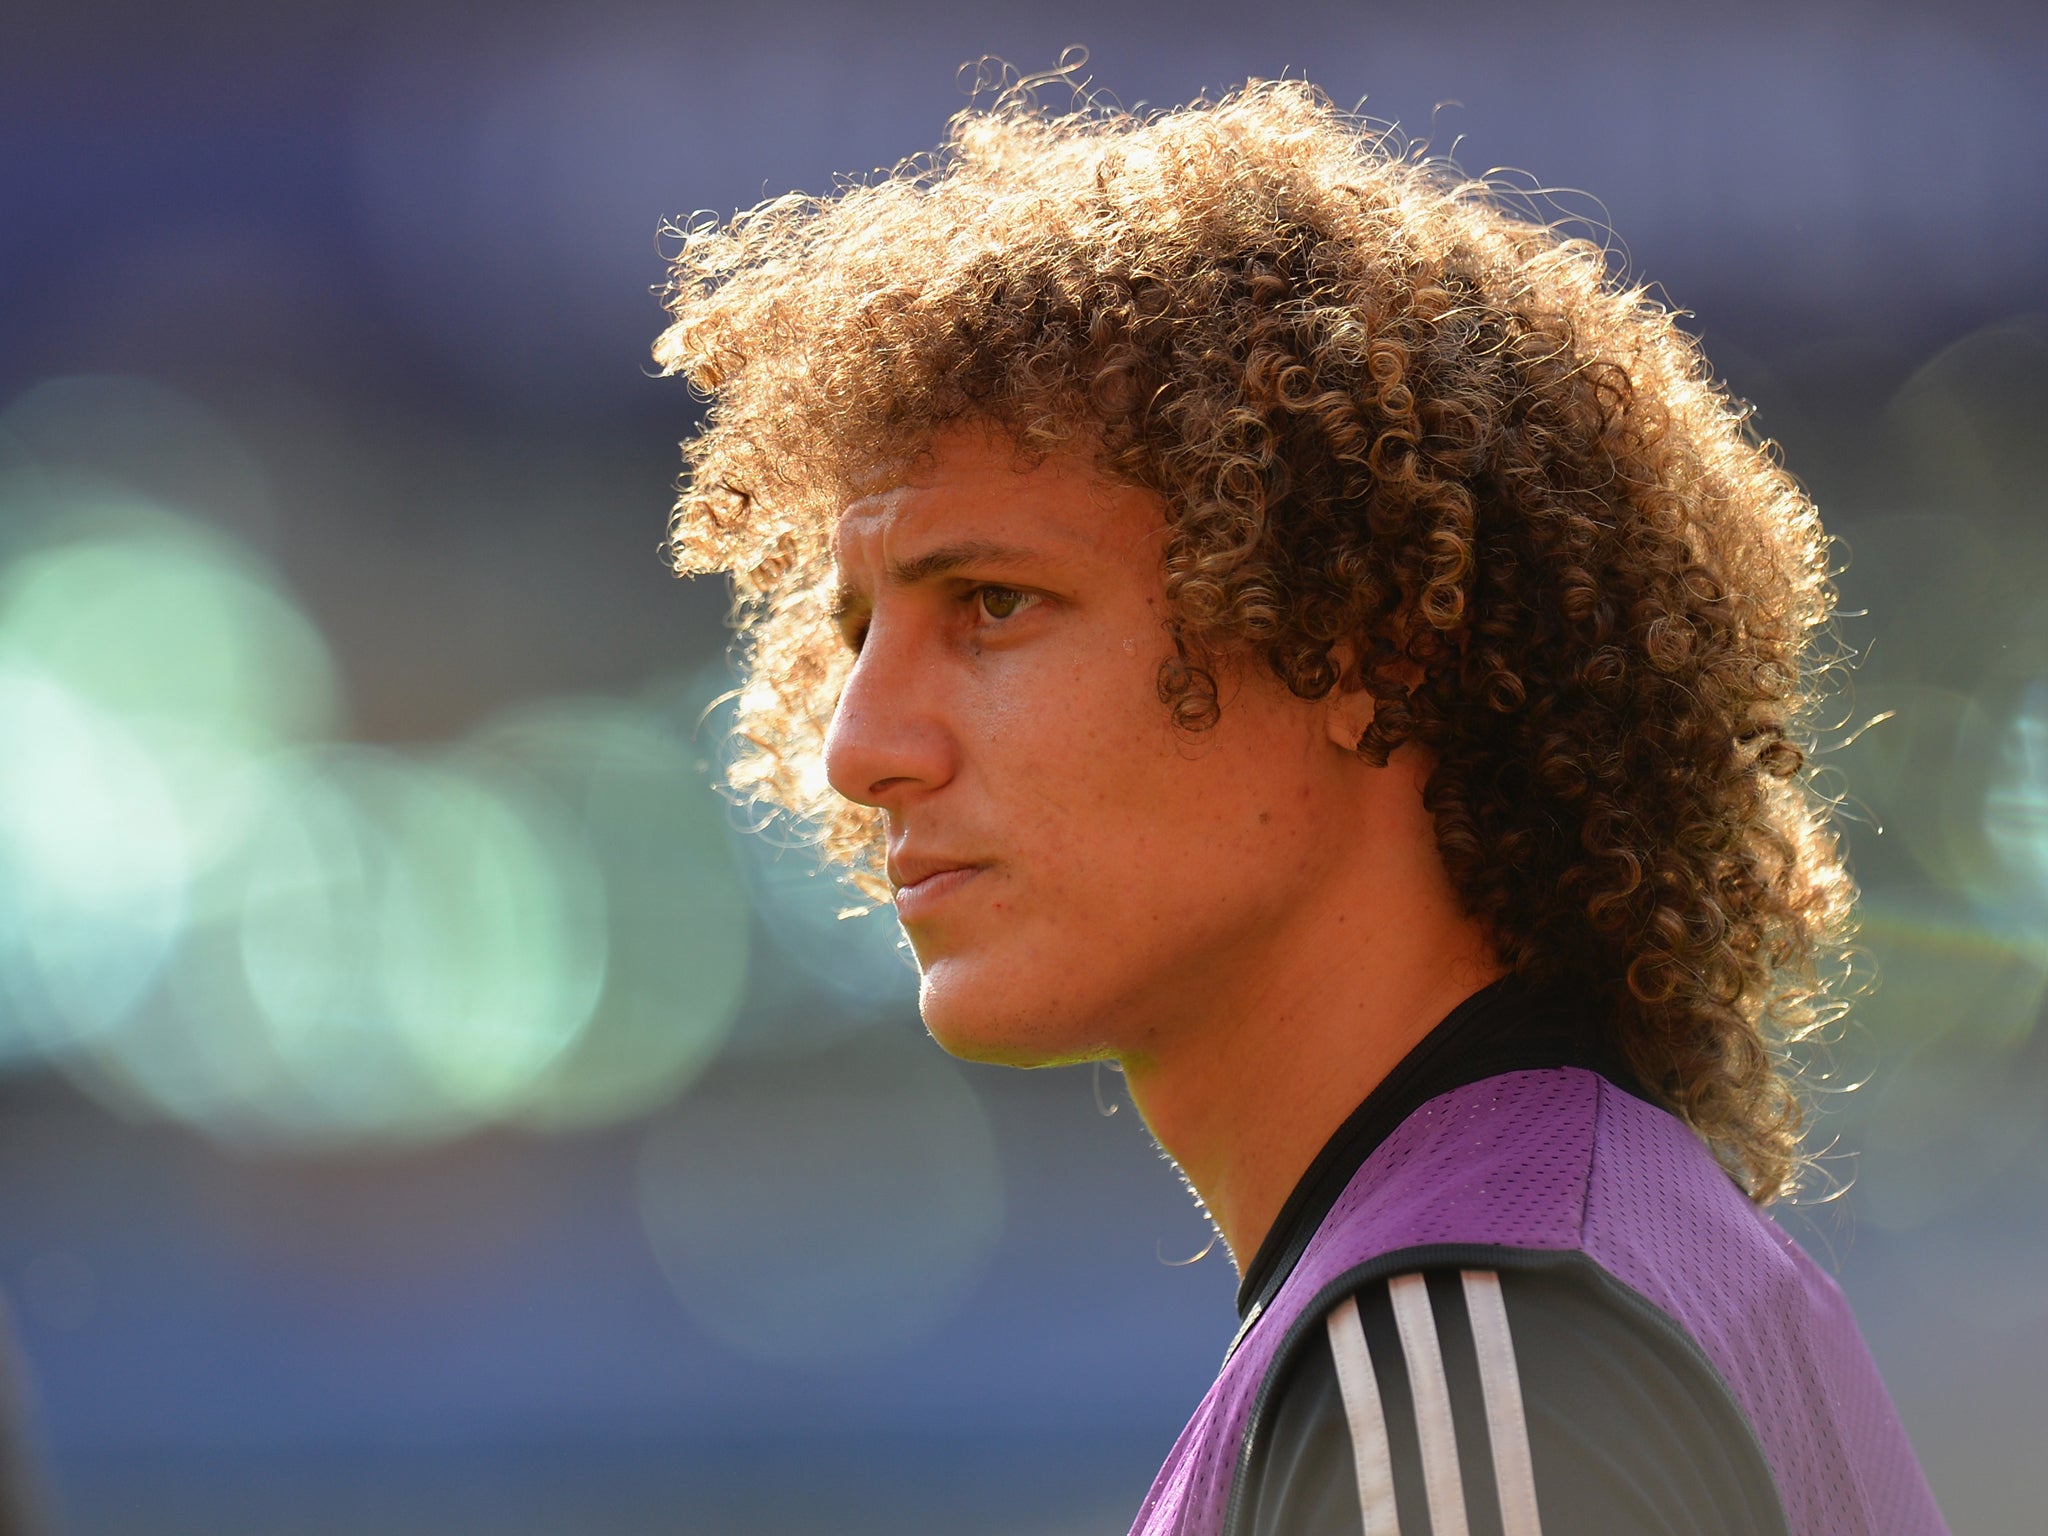 David Luiz has revealed he turned down a move to Barcelona